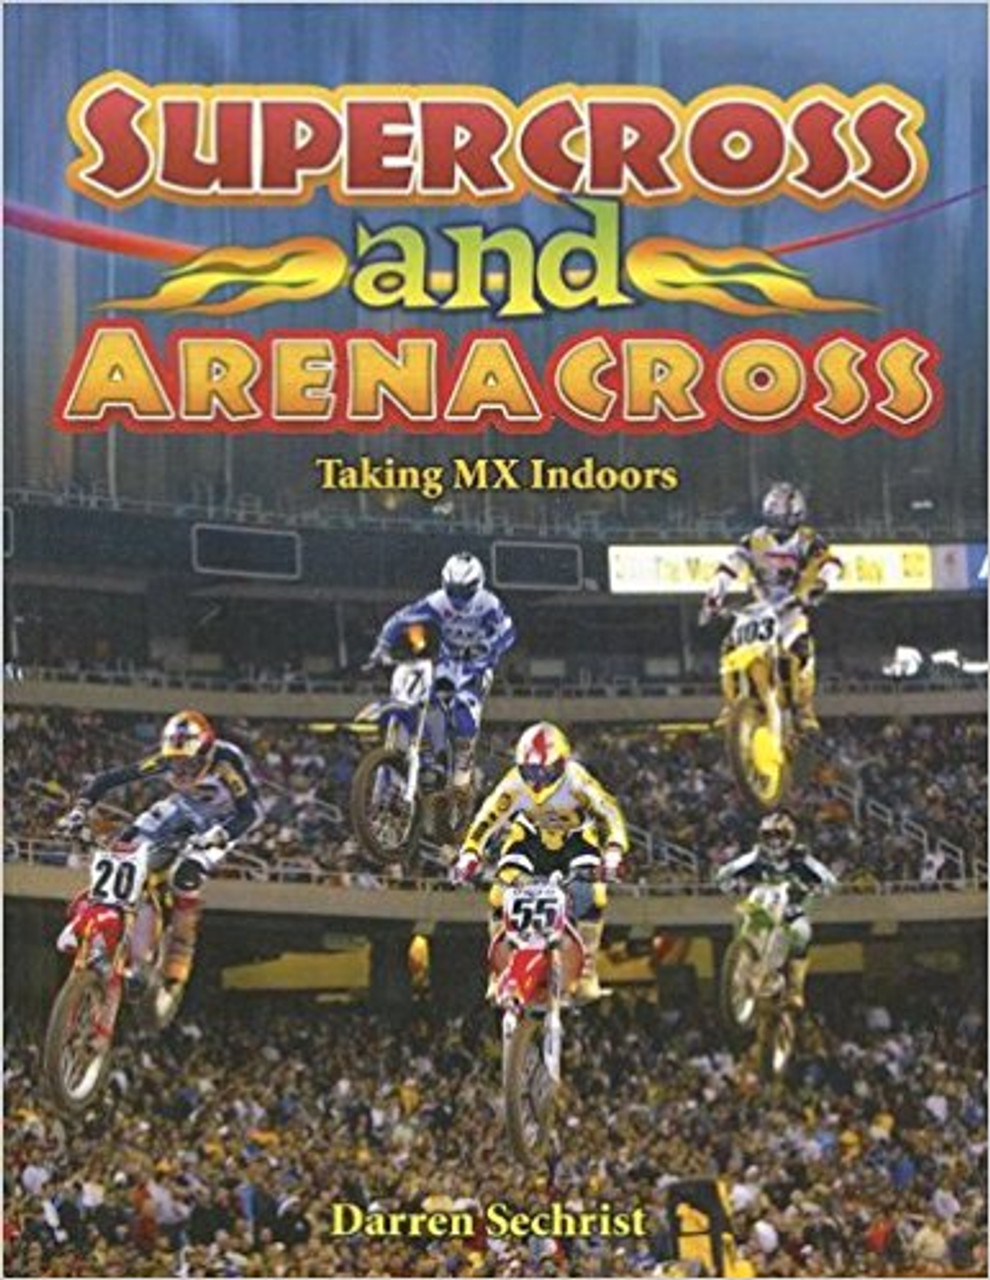 Supercross and Arenacross by Darren Sechrist